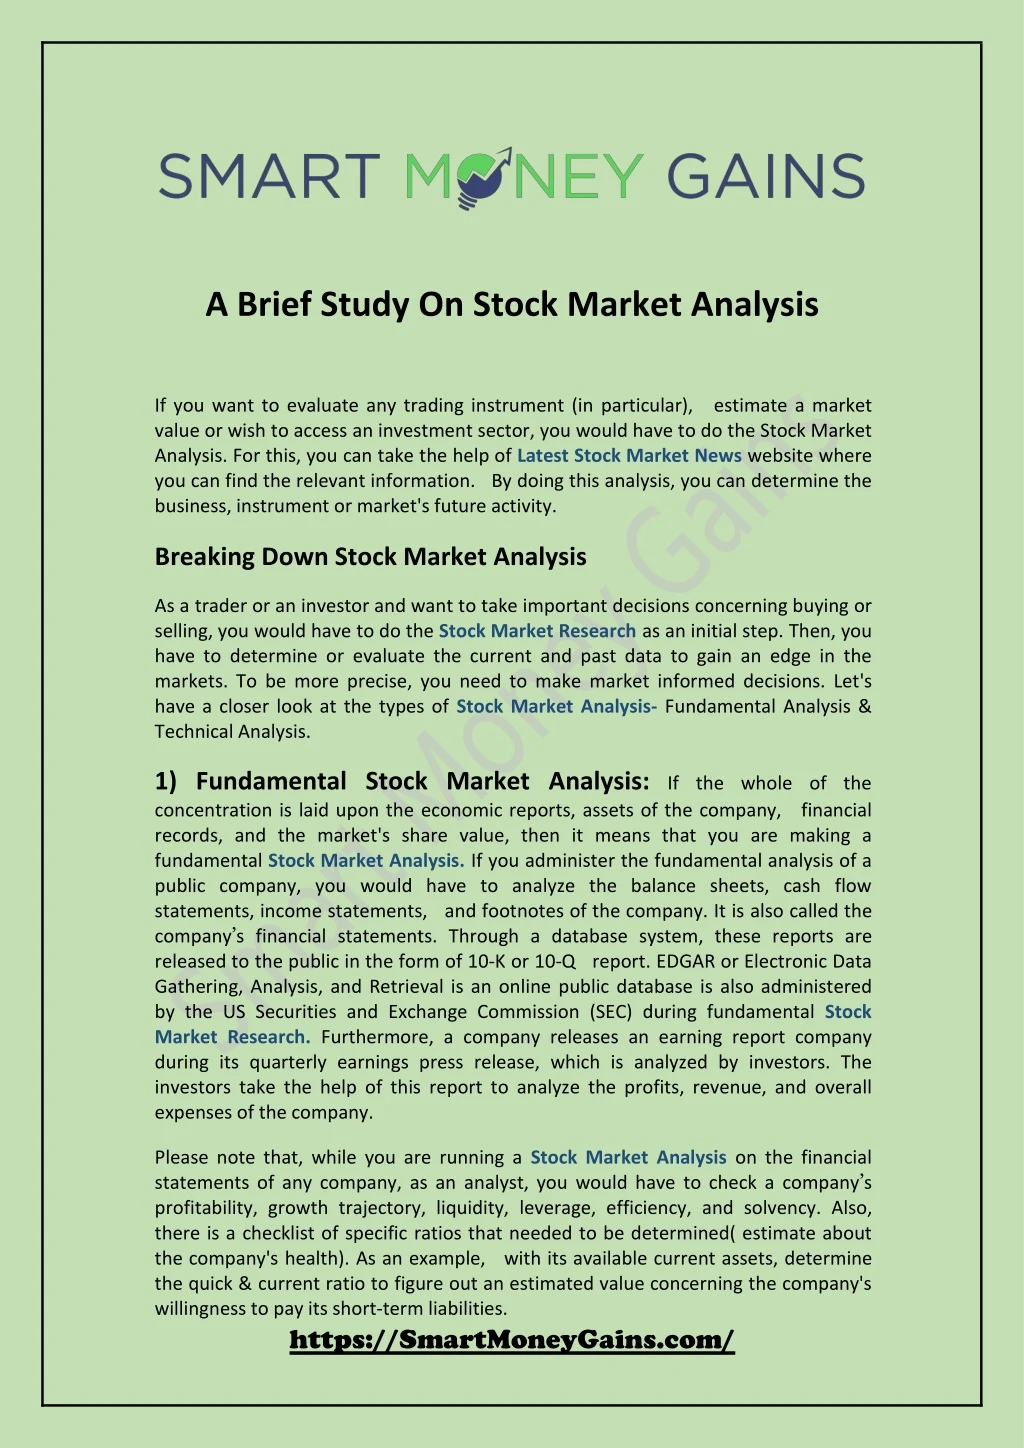 a brief study on stock market analysis